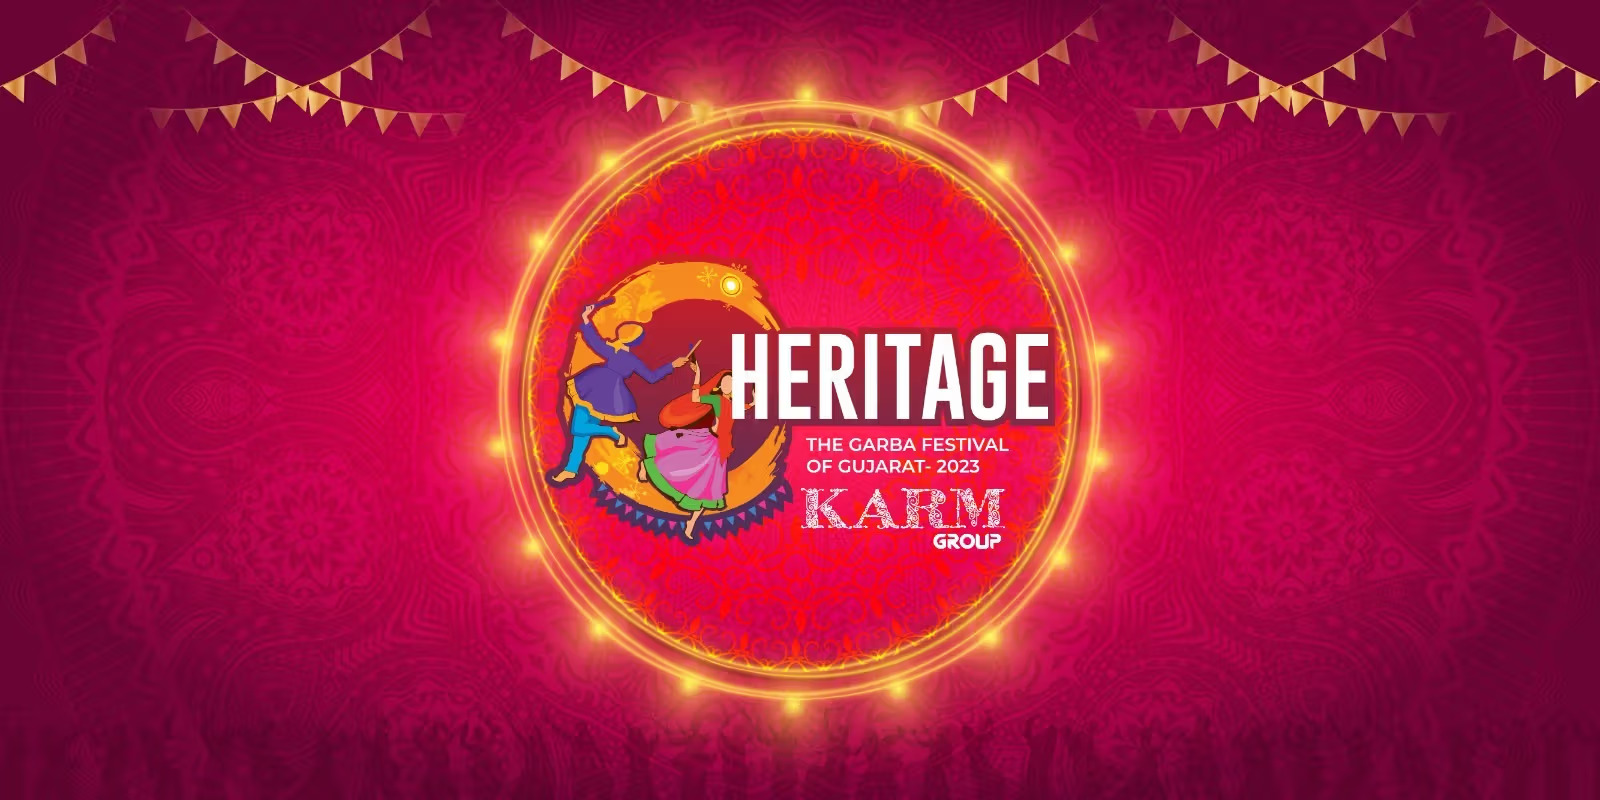 Garba Dance On Poster Banner Design For Dandiya Night Royalty Free SVG,  Cliparts, Vectors, and Stock Illustration. Image 87567808.